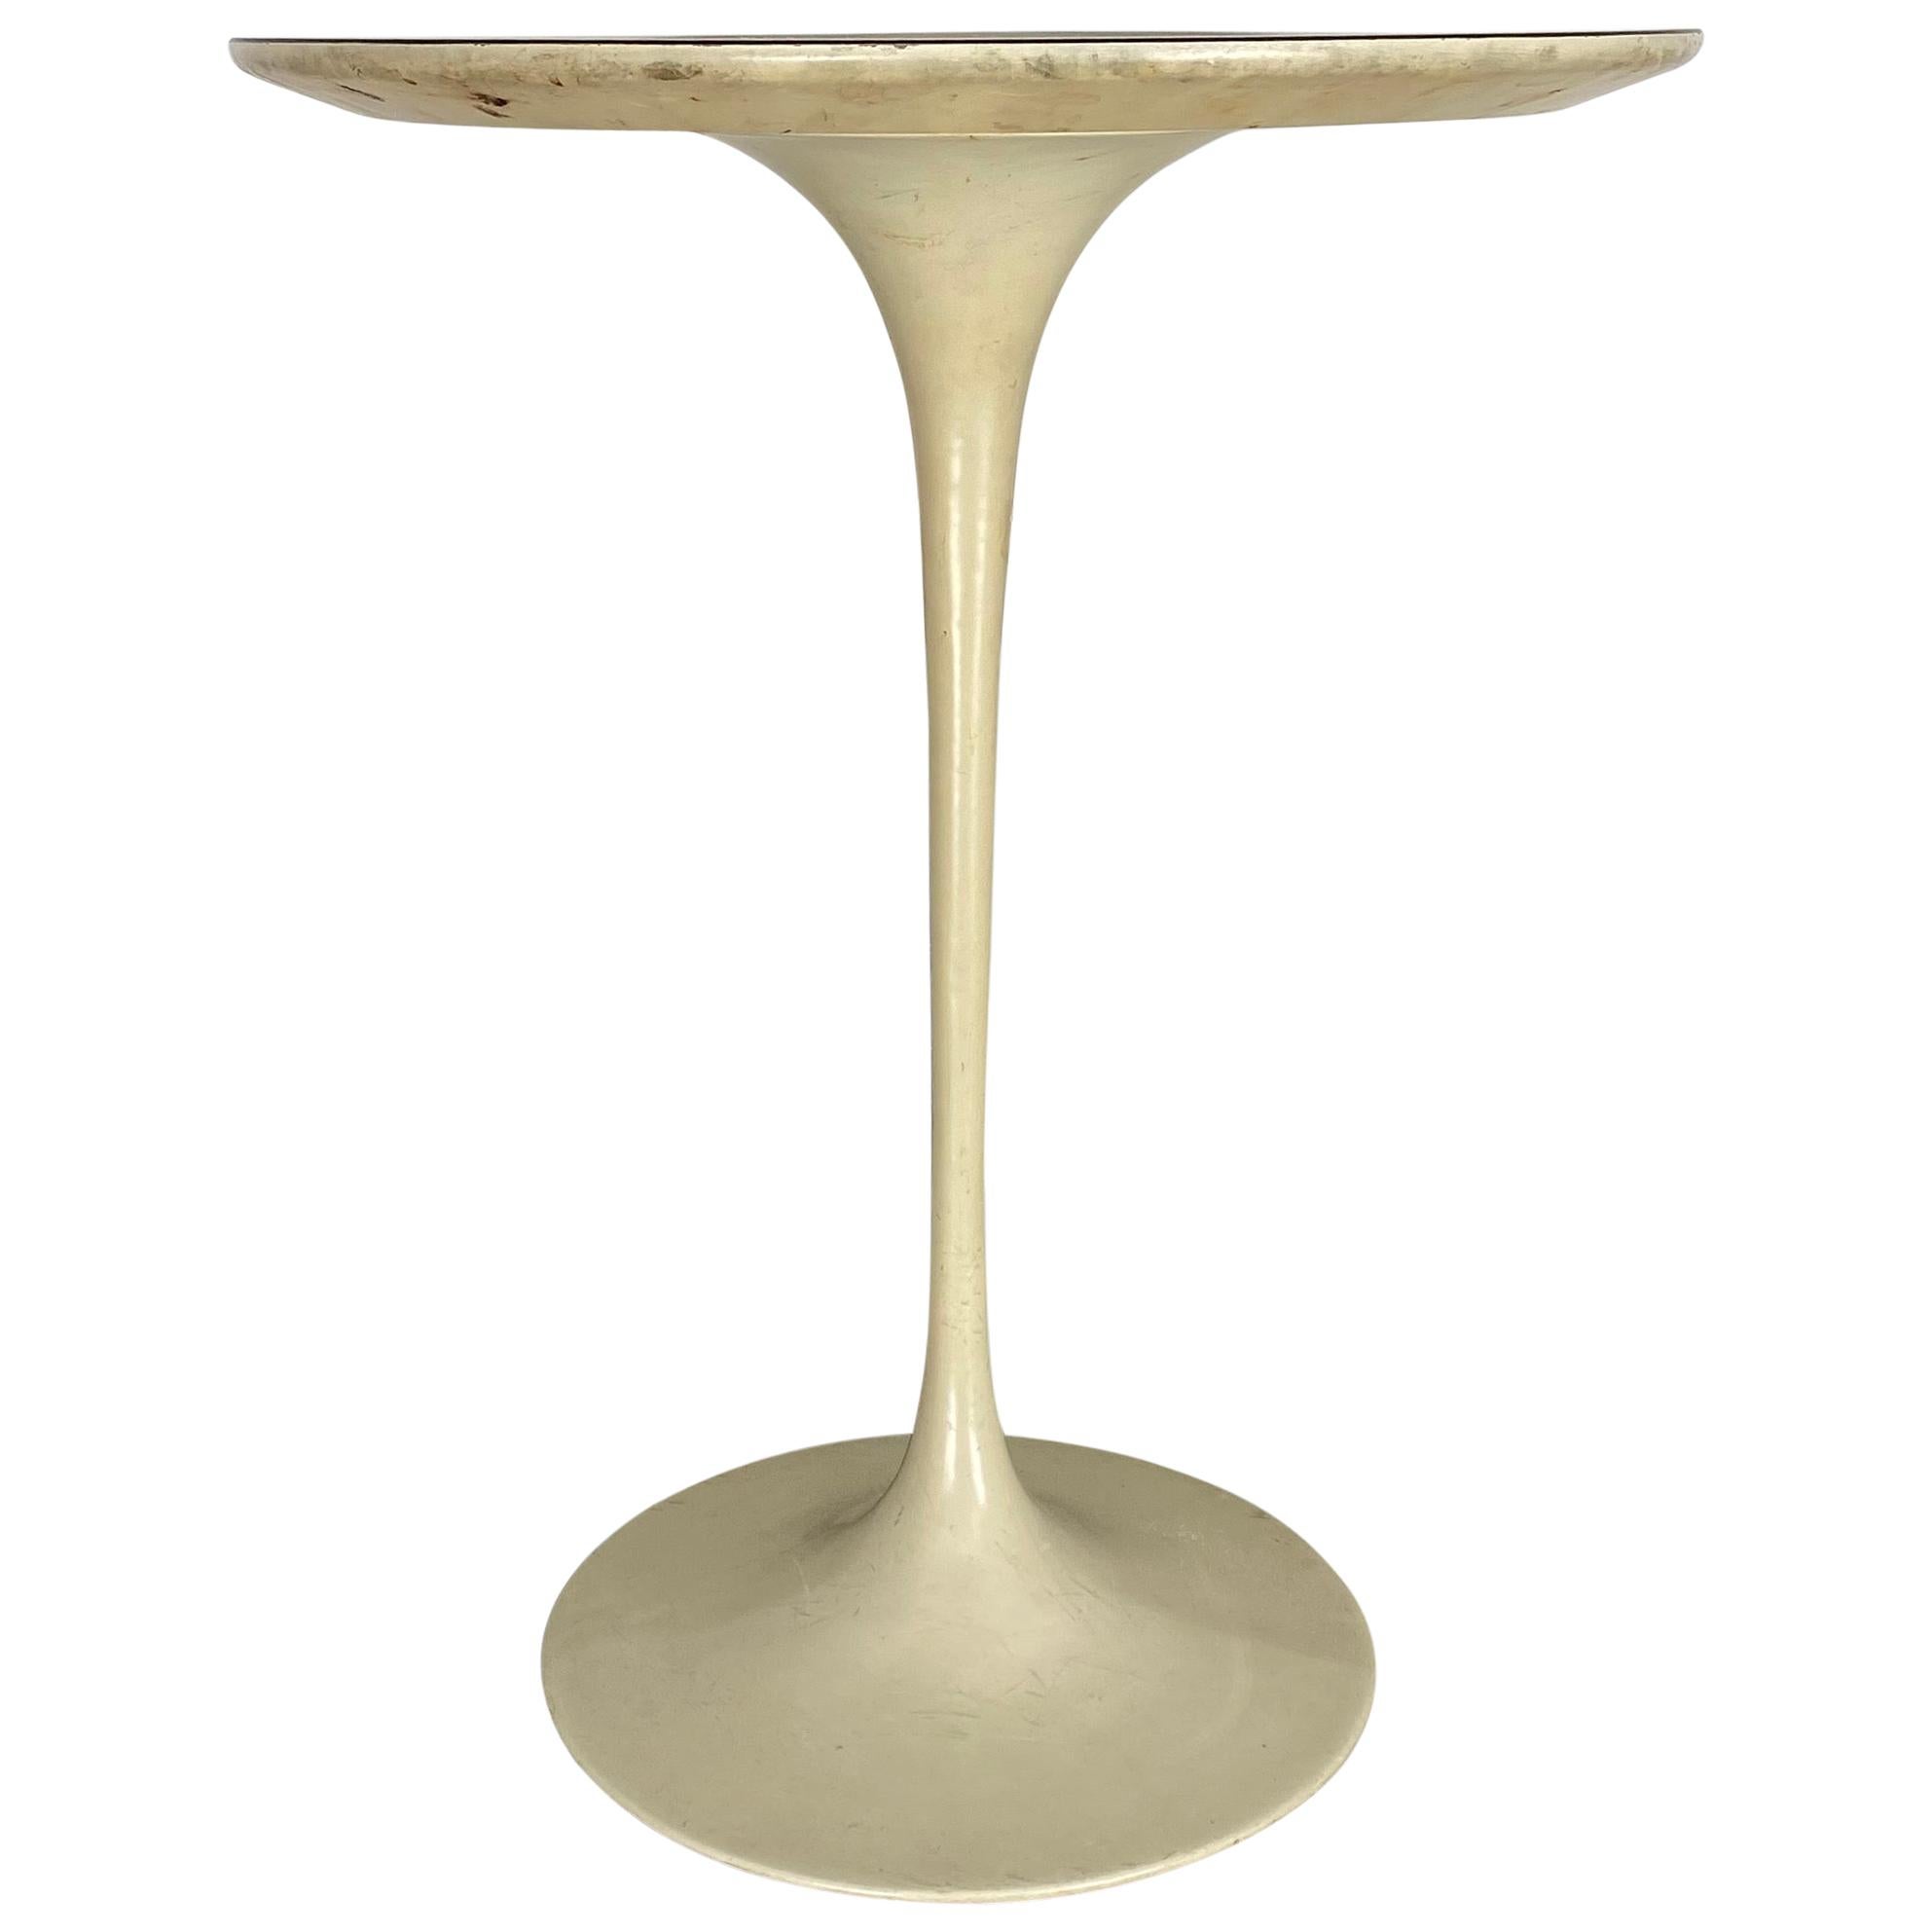 Early Pedestal Tulip Side Table by Eero Saarinen for Knoll Associates Inc.